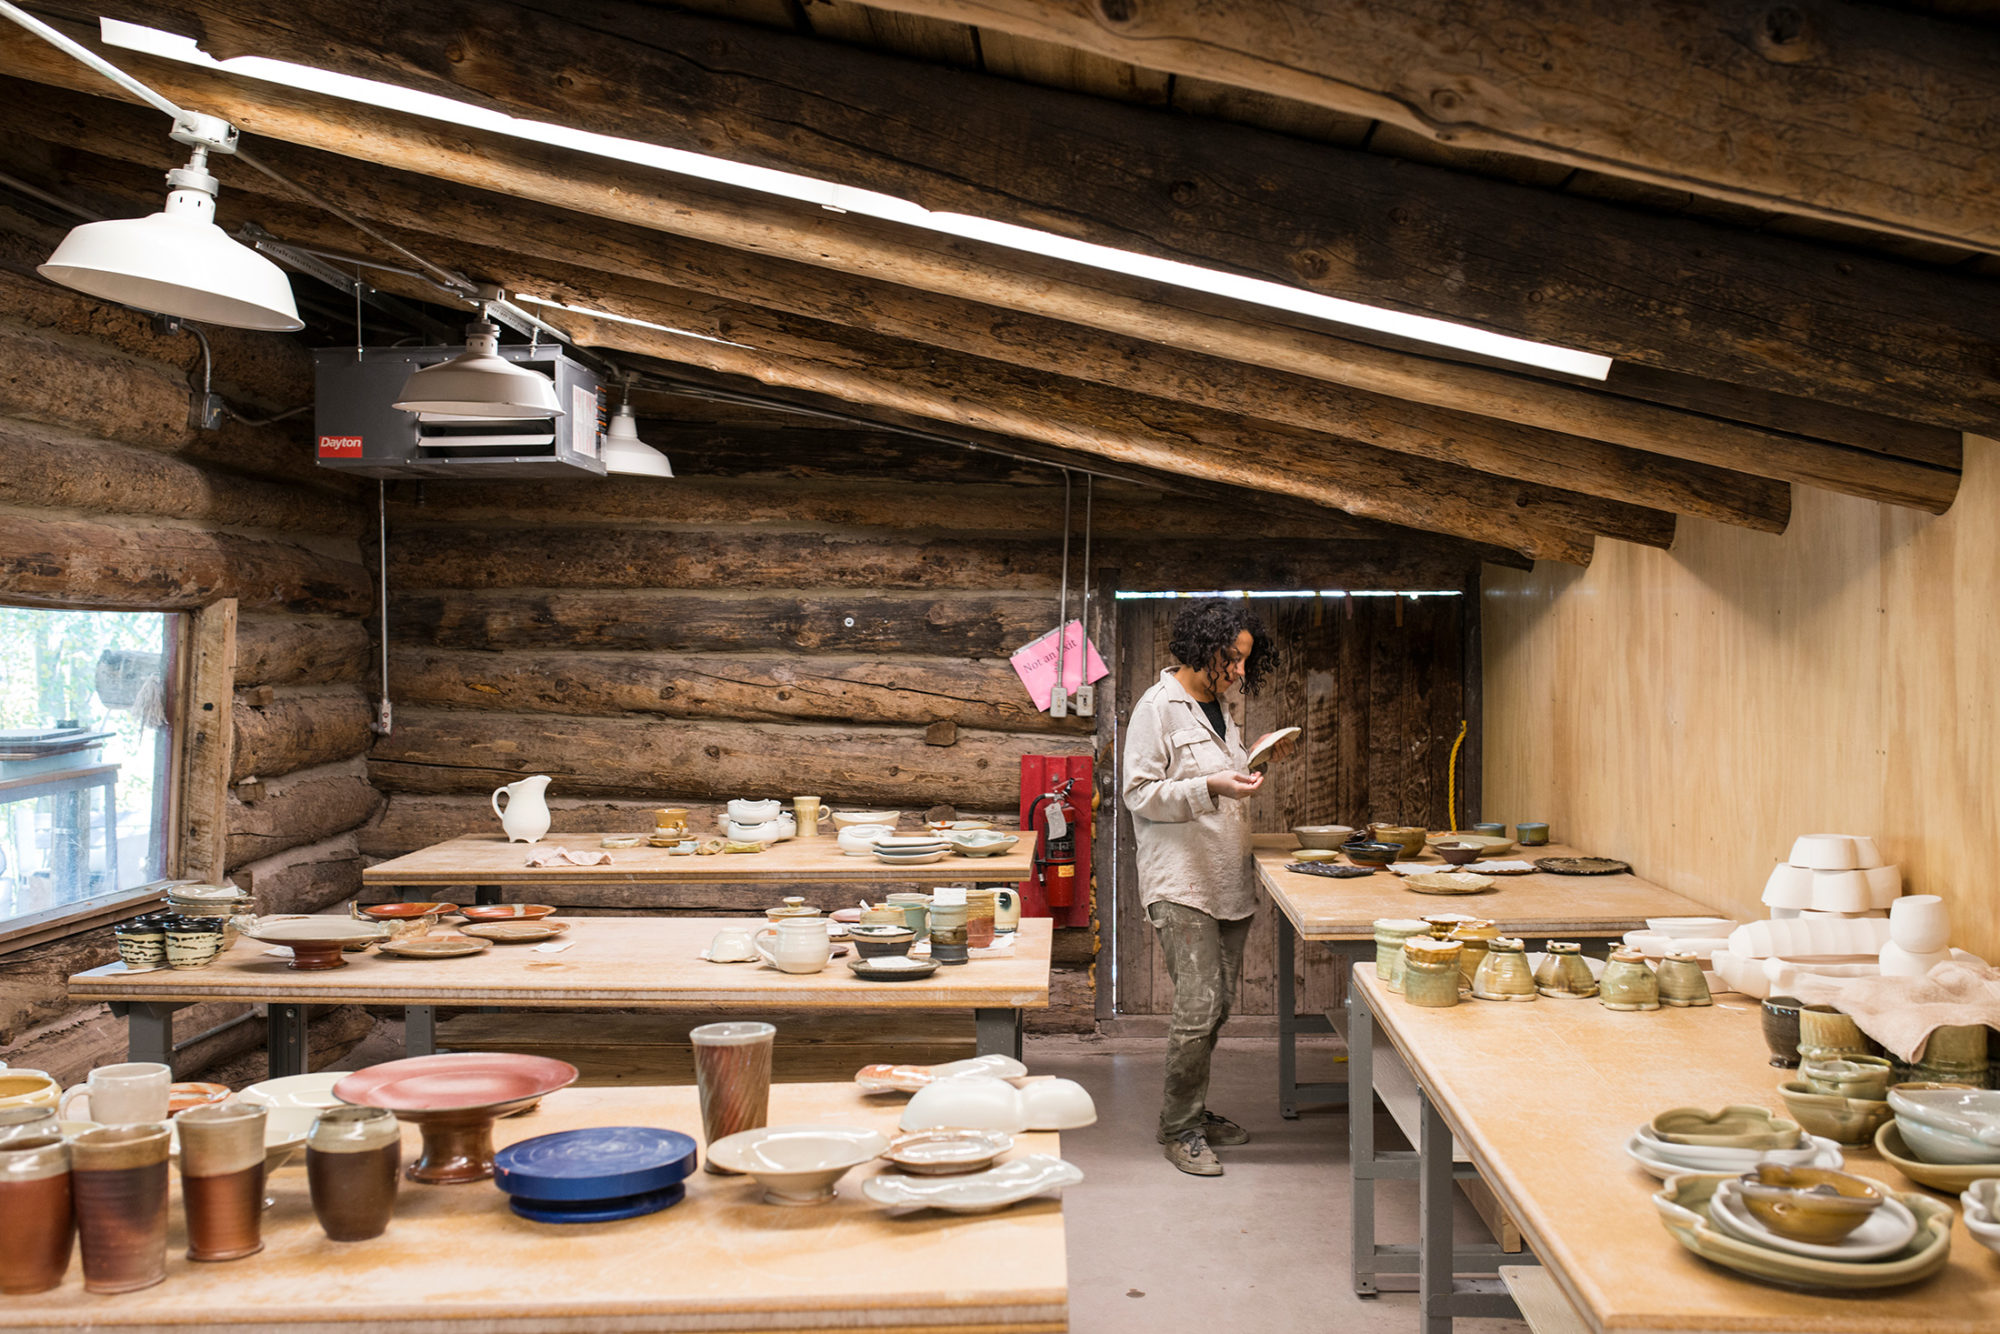 Ceramics - Anderson Ranch Arts Center